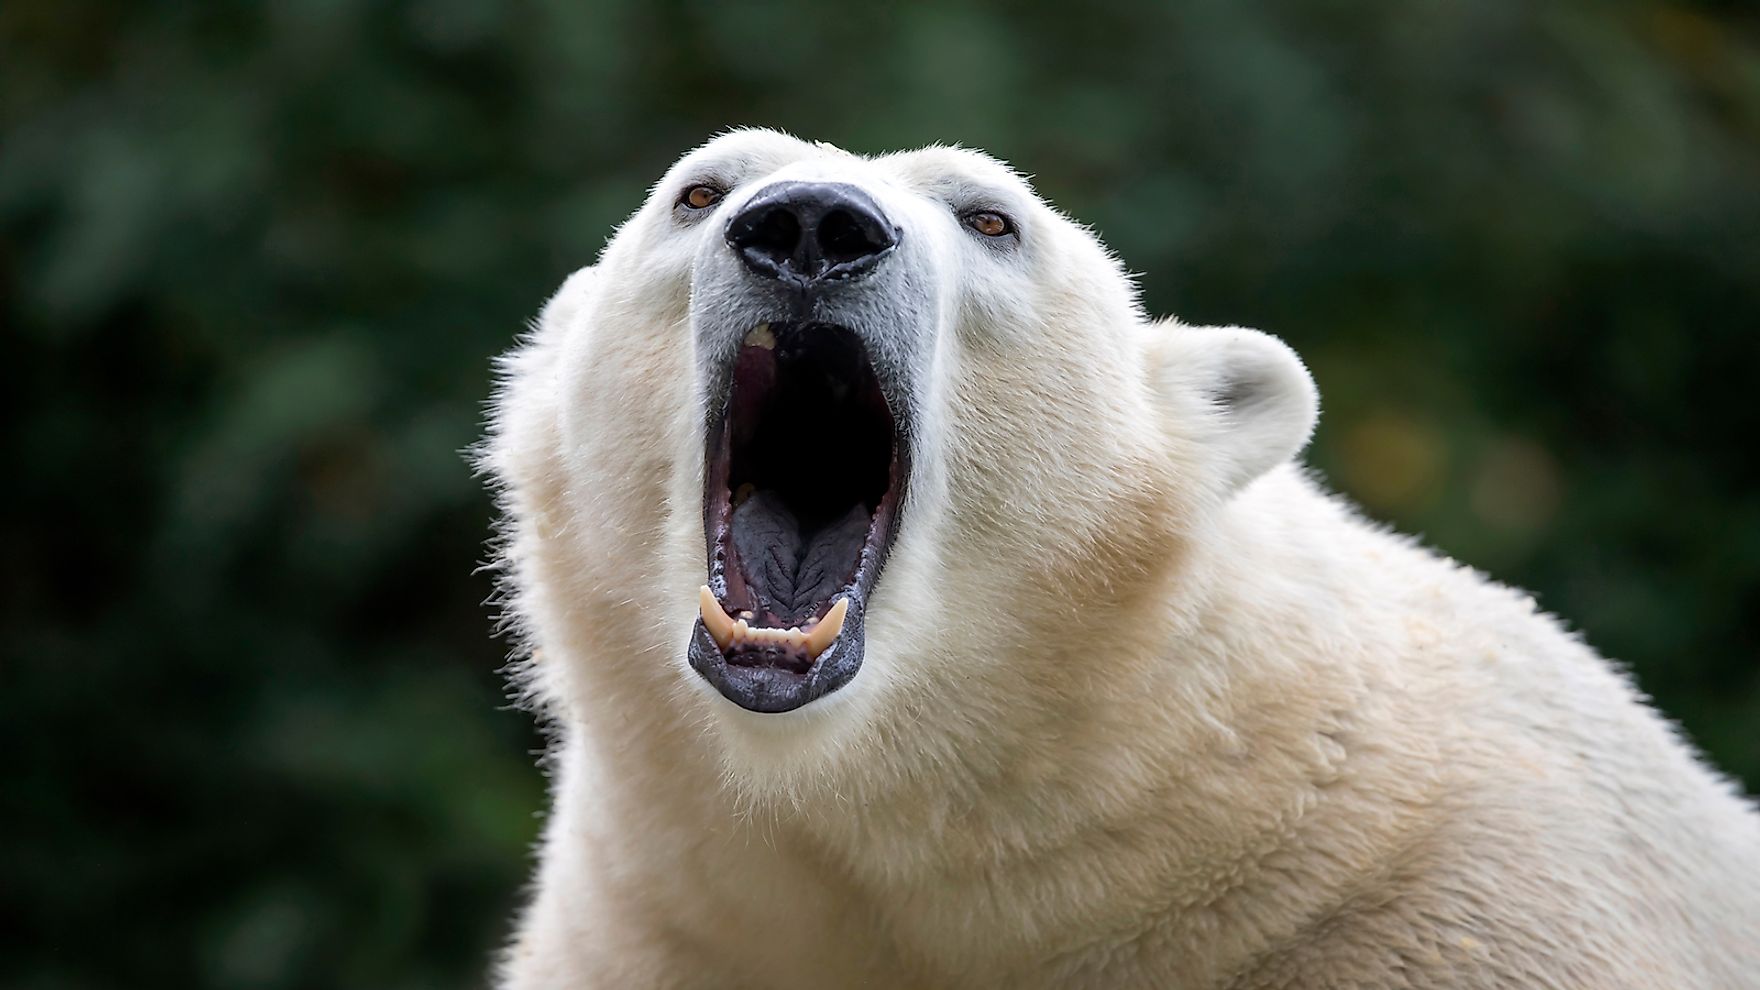 polar bears are aggressive